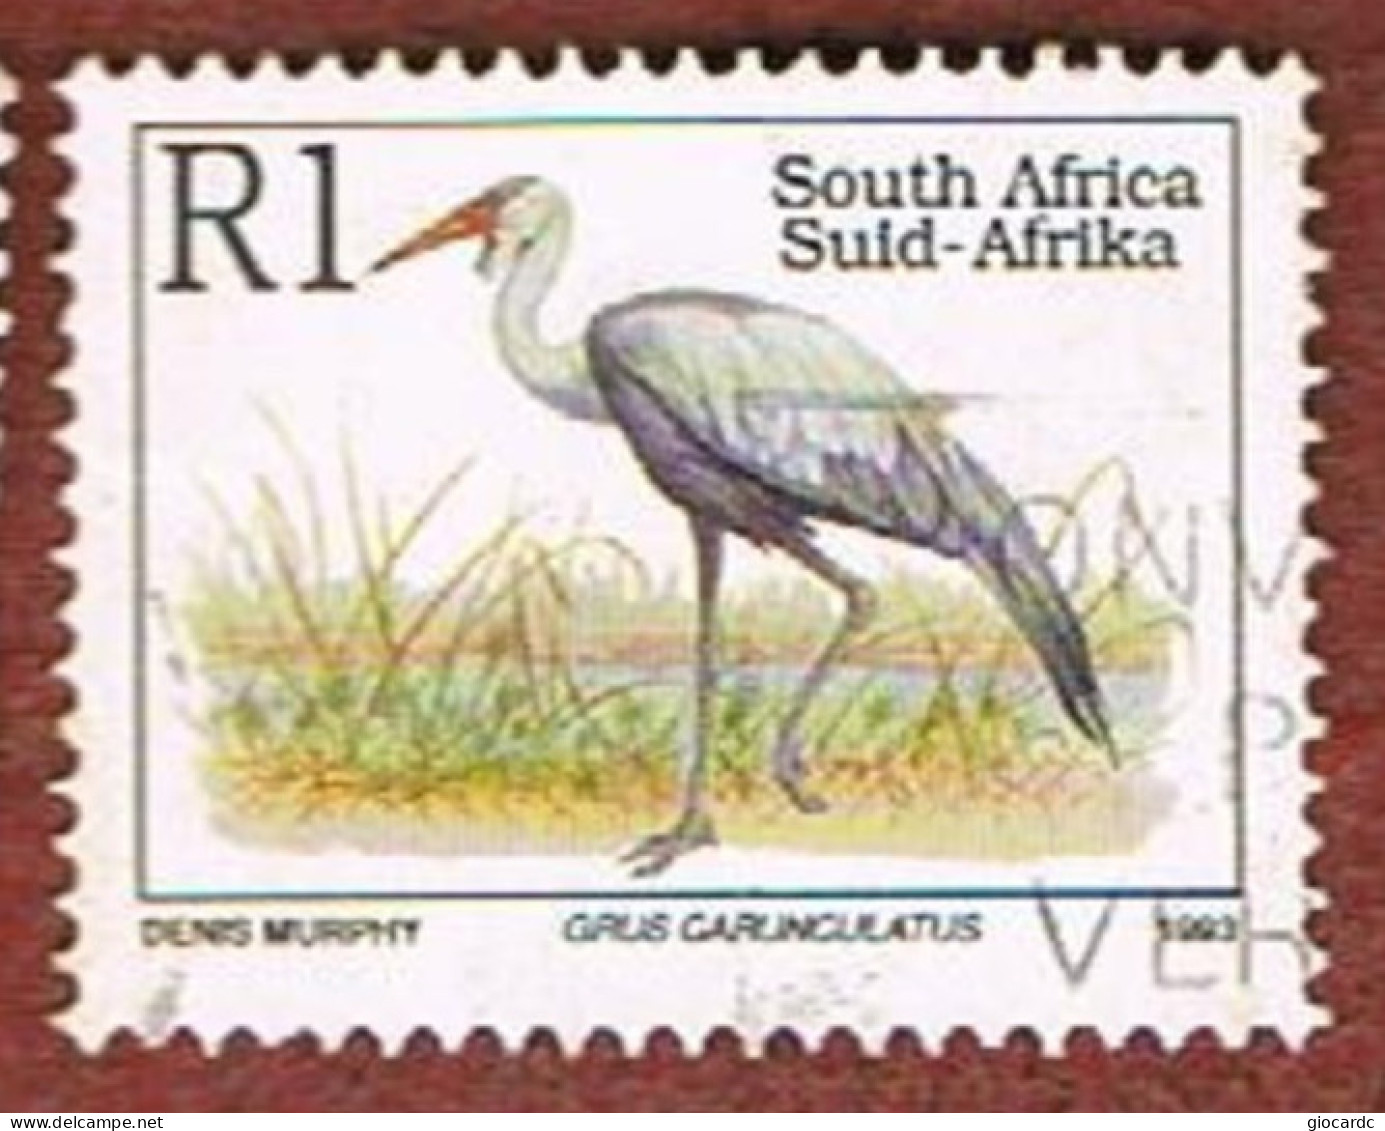 SUD AFRICA (SOUTH AFRICA) - SG 817c - 1993 ENDANGERED ANIMALS: WATTLED CRANE   - USED - Gebruikt